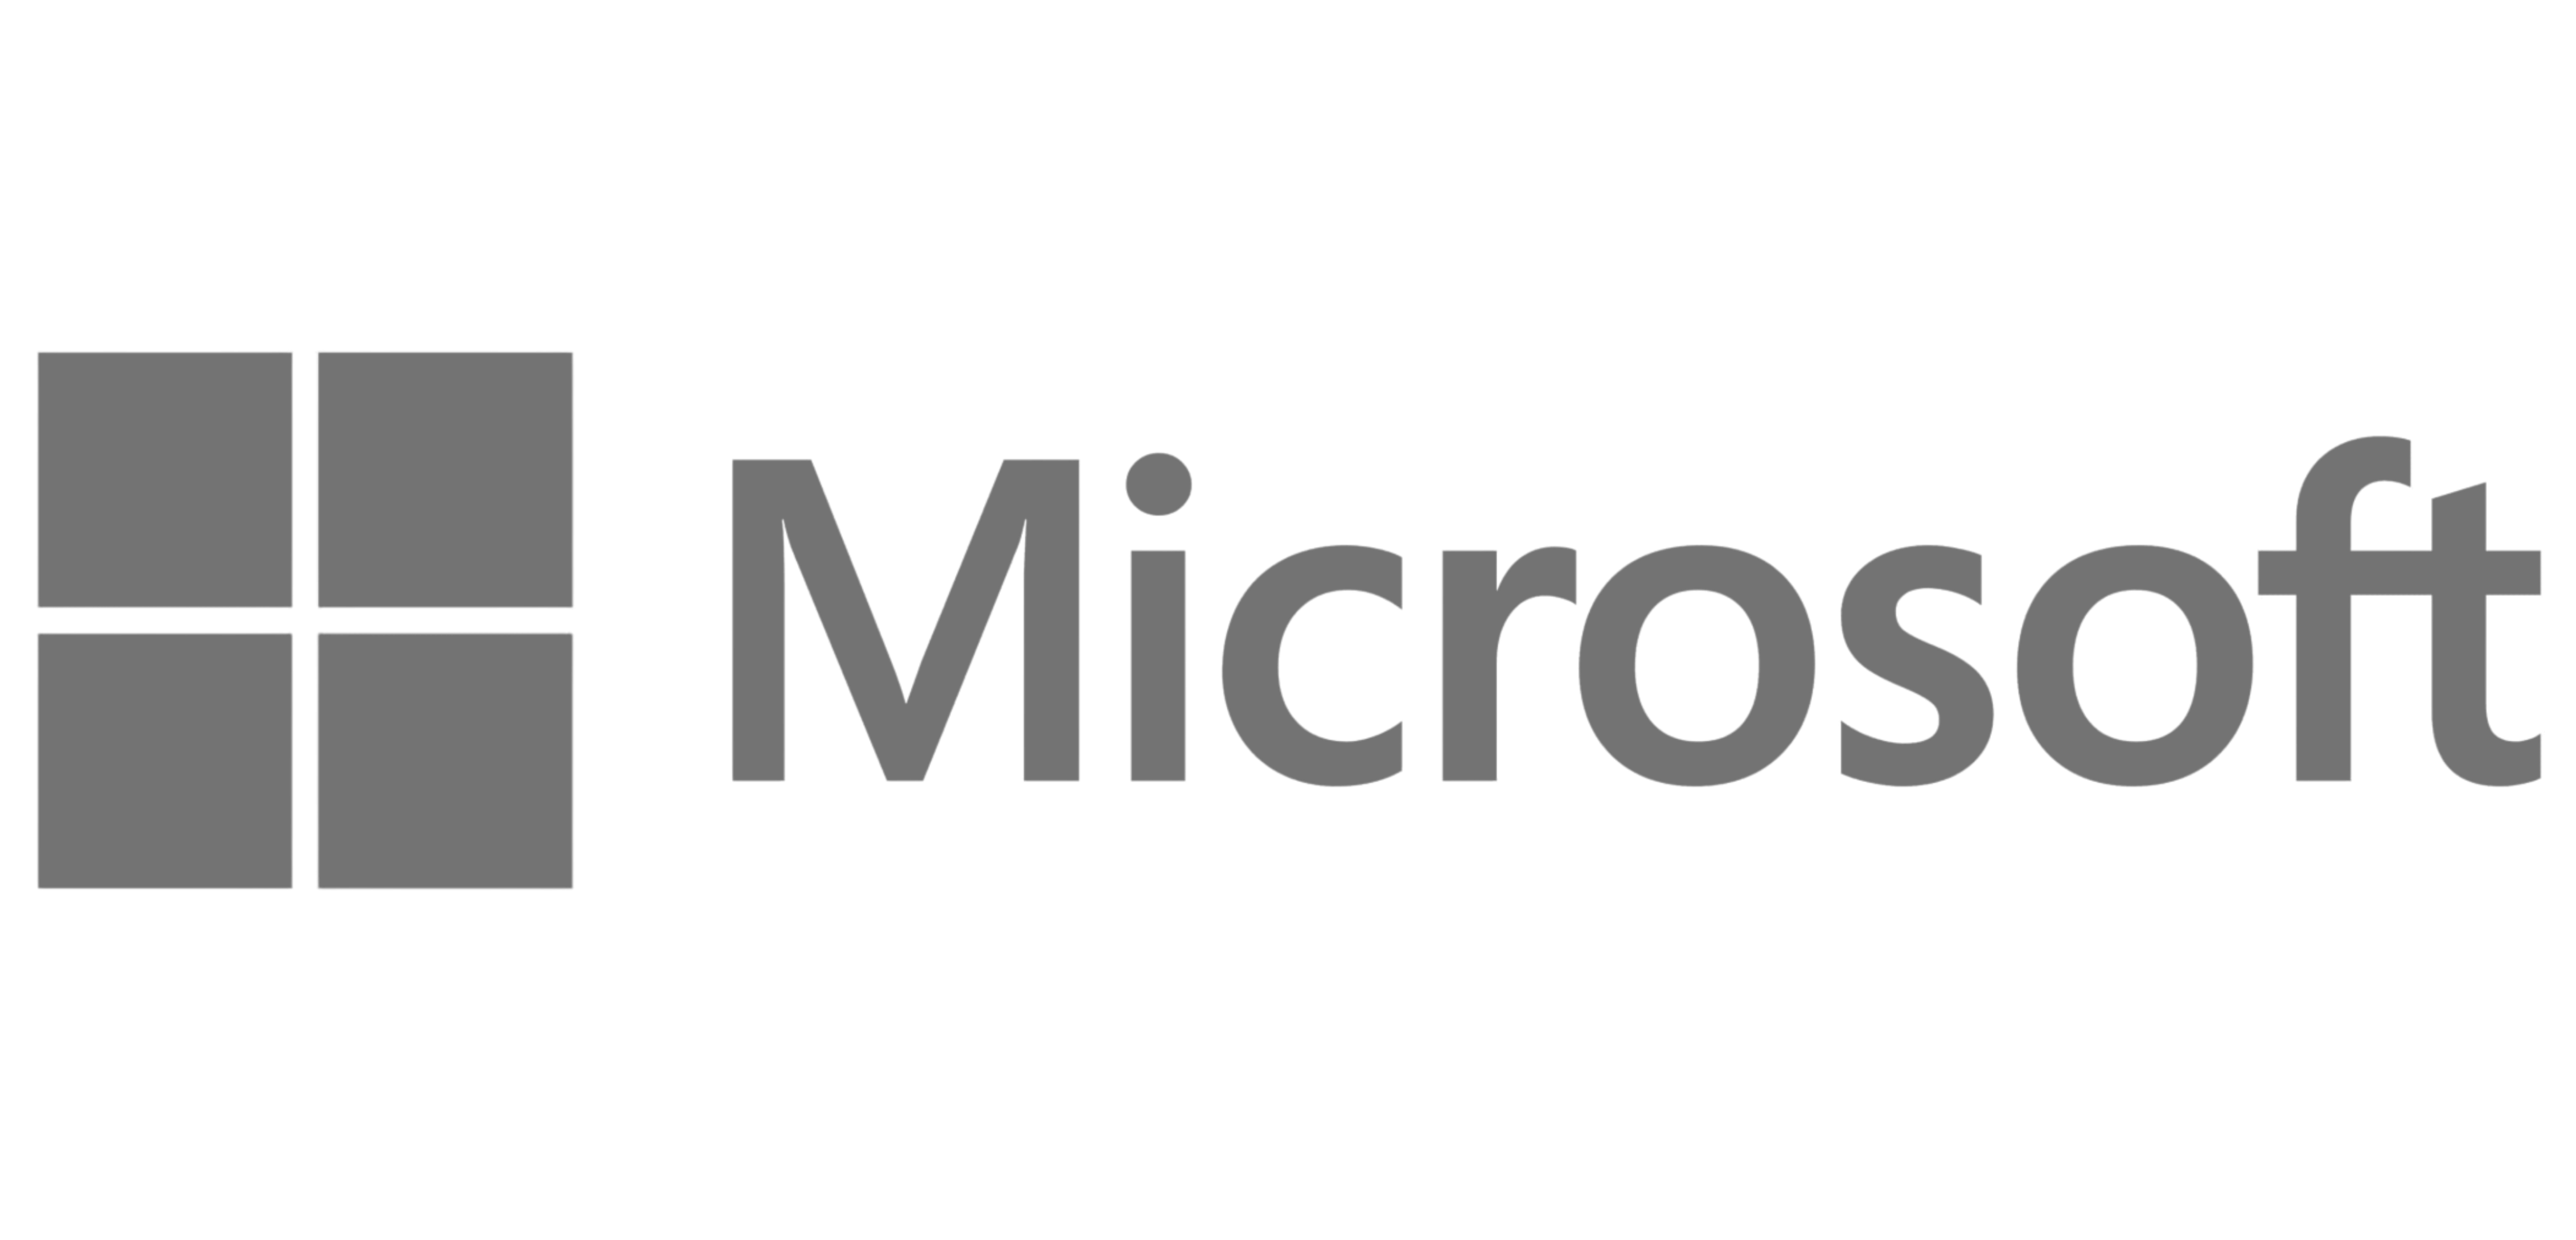 Design Microsoft logo